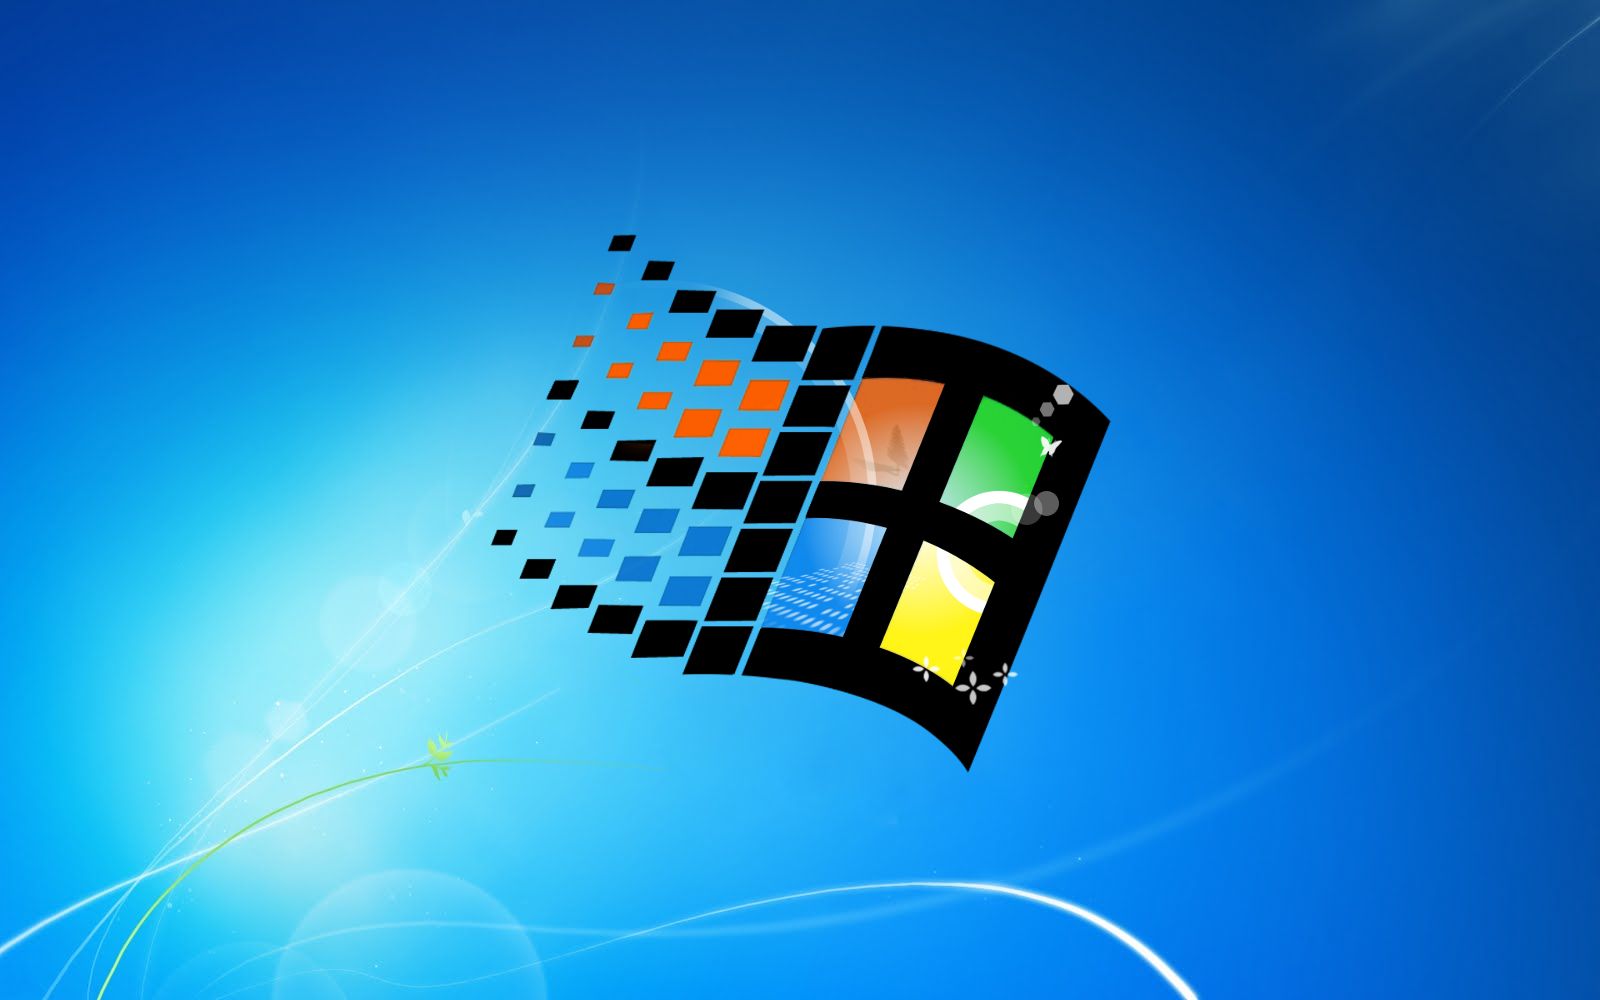 Teal (Windows 95 / 98 default wallpaper)